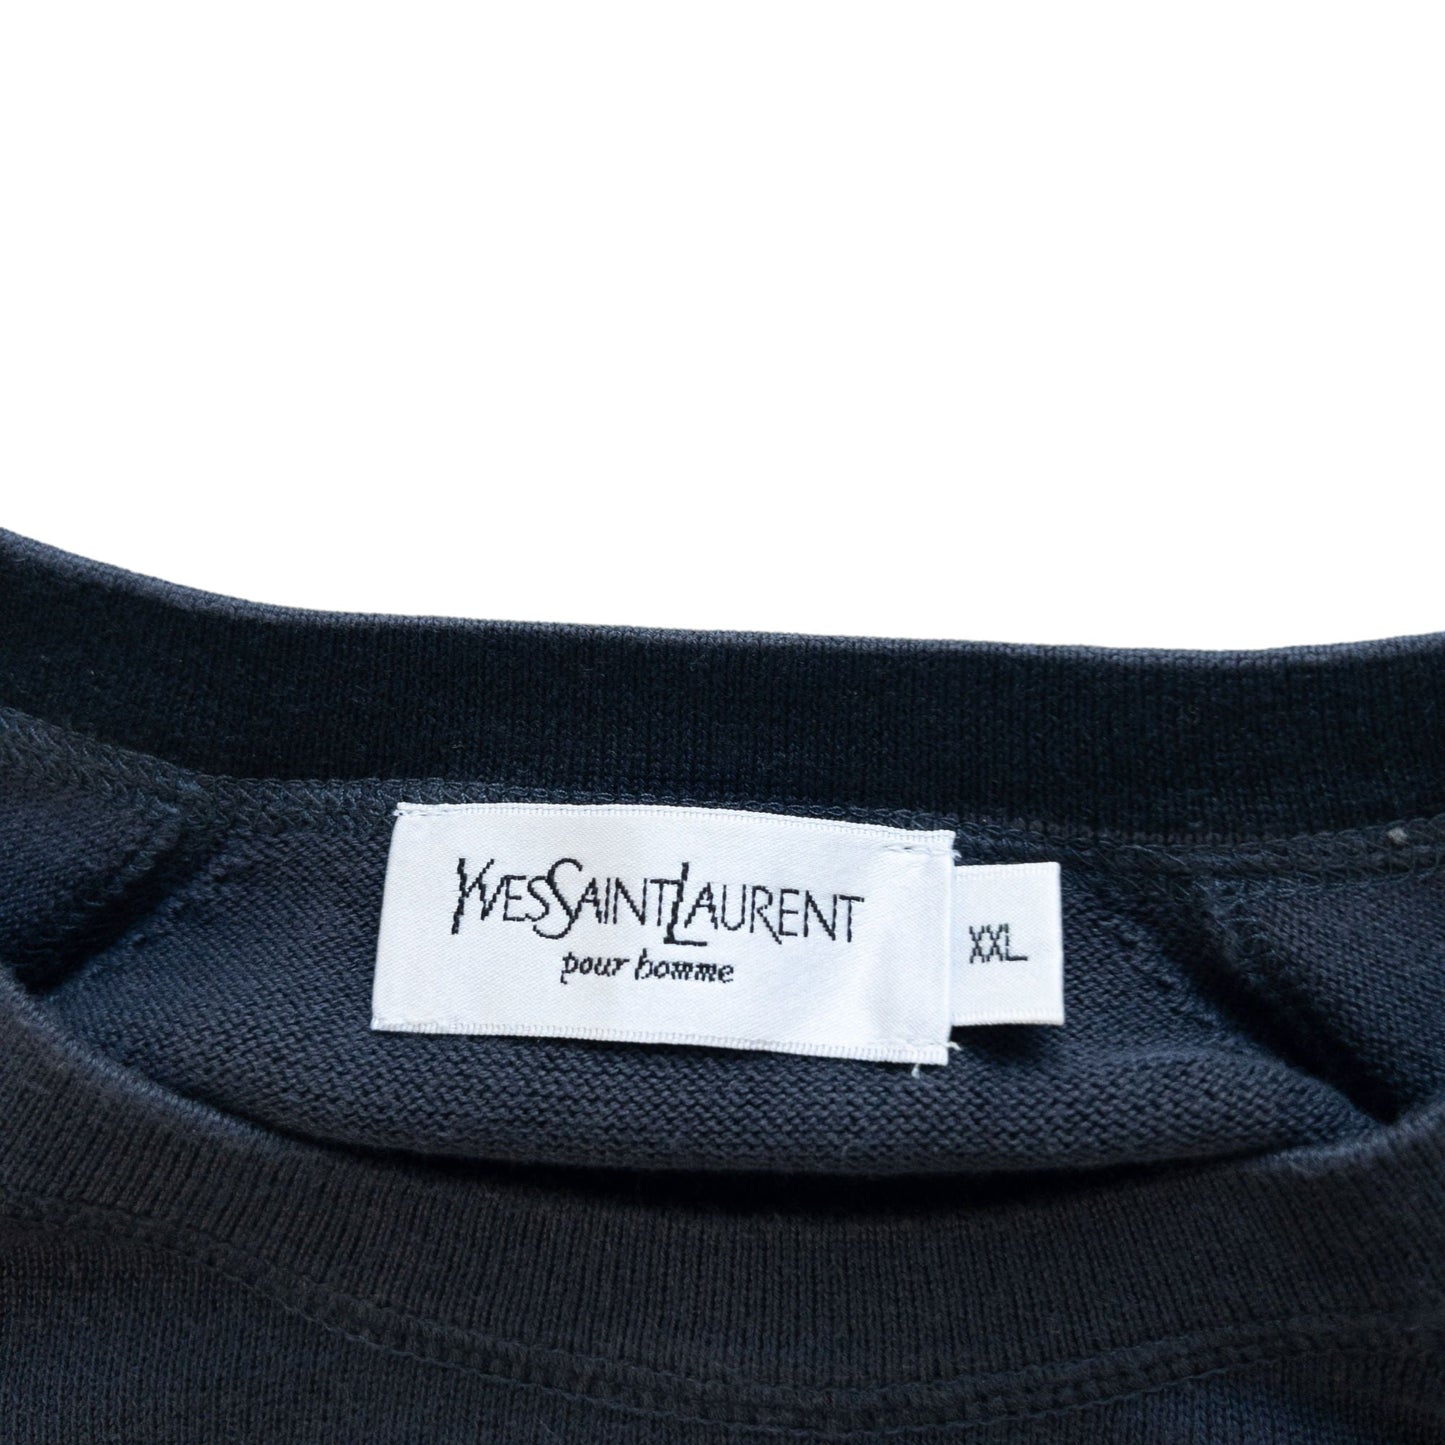 Vintage YSL Yves Saint Laurent Knit Jumper Size XL